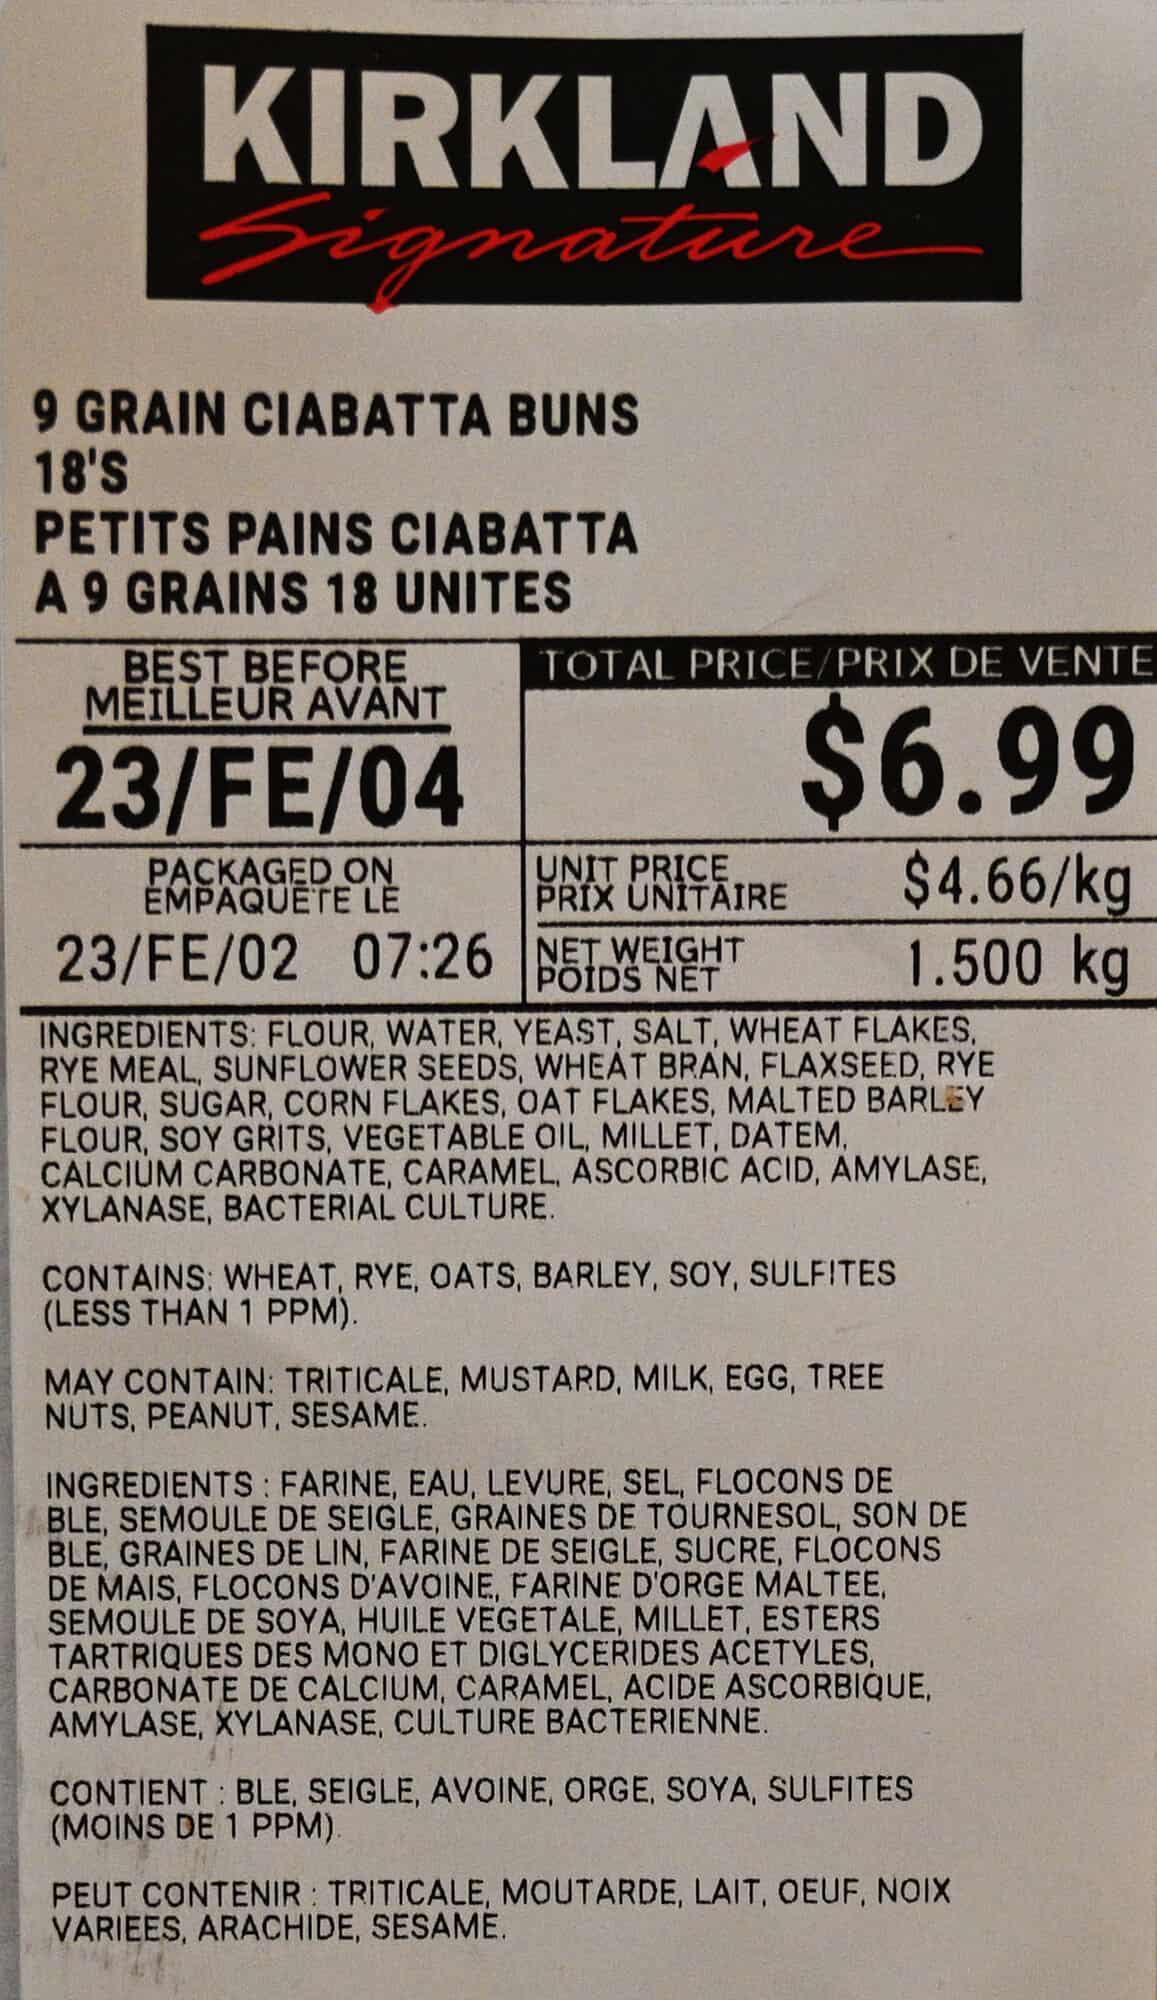 Image of the Costco Kirkland Signature 9 Grain Ciabatta Buns label from the bag.